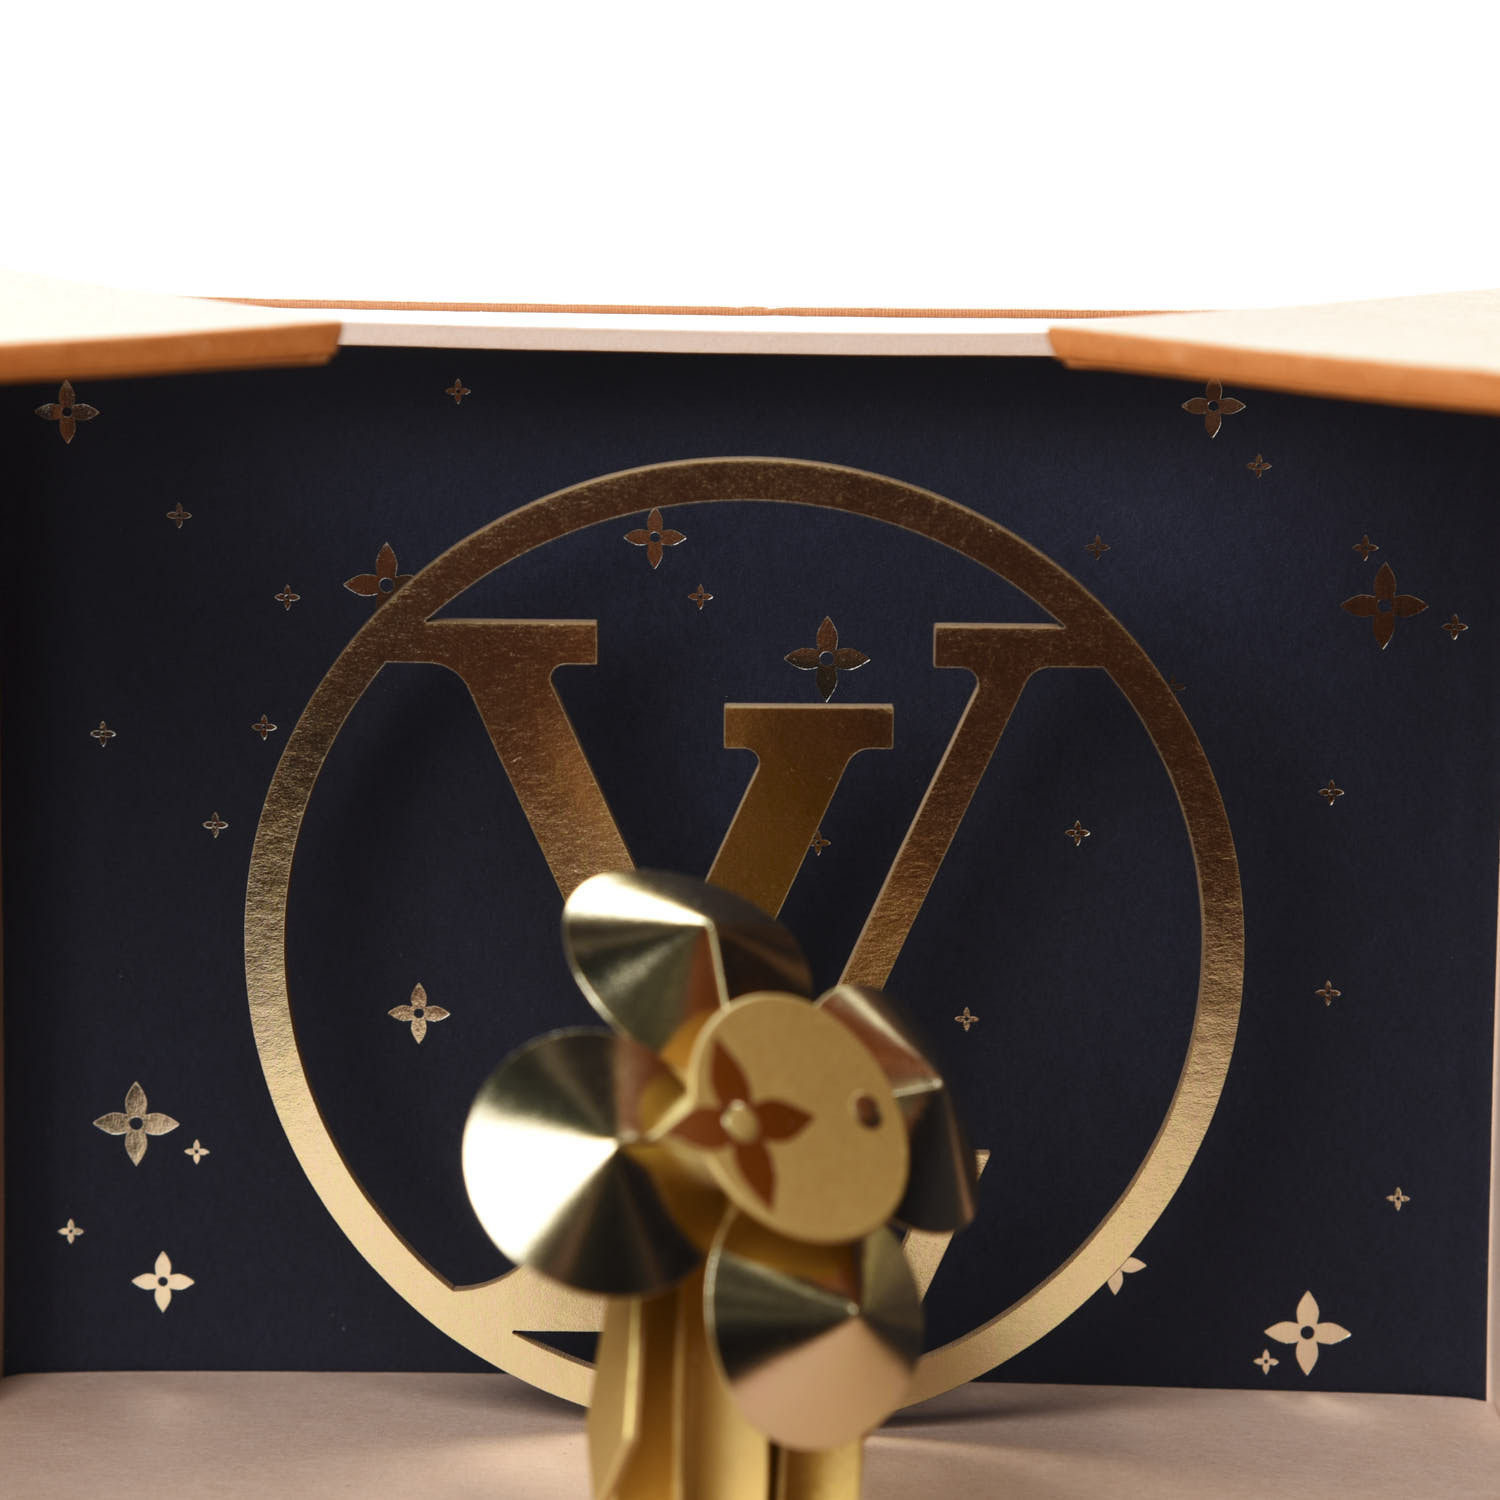 Louis Vuitton Vivienne Music Box